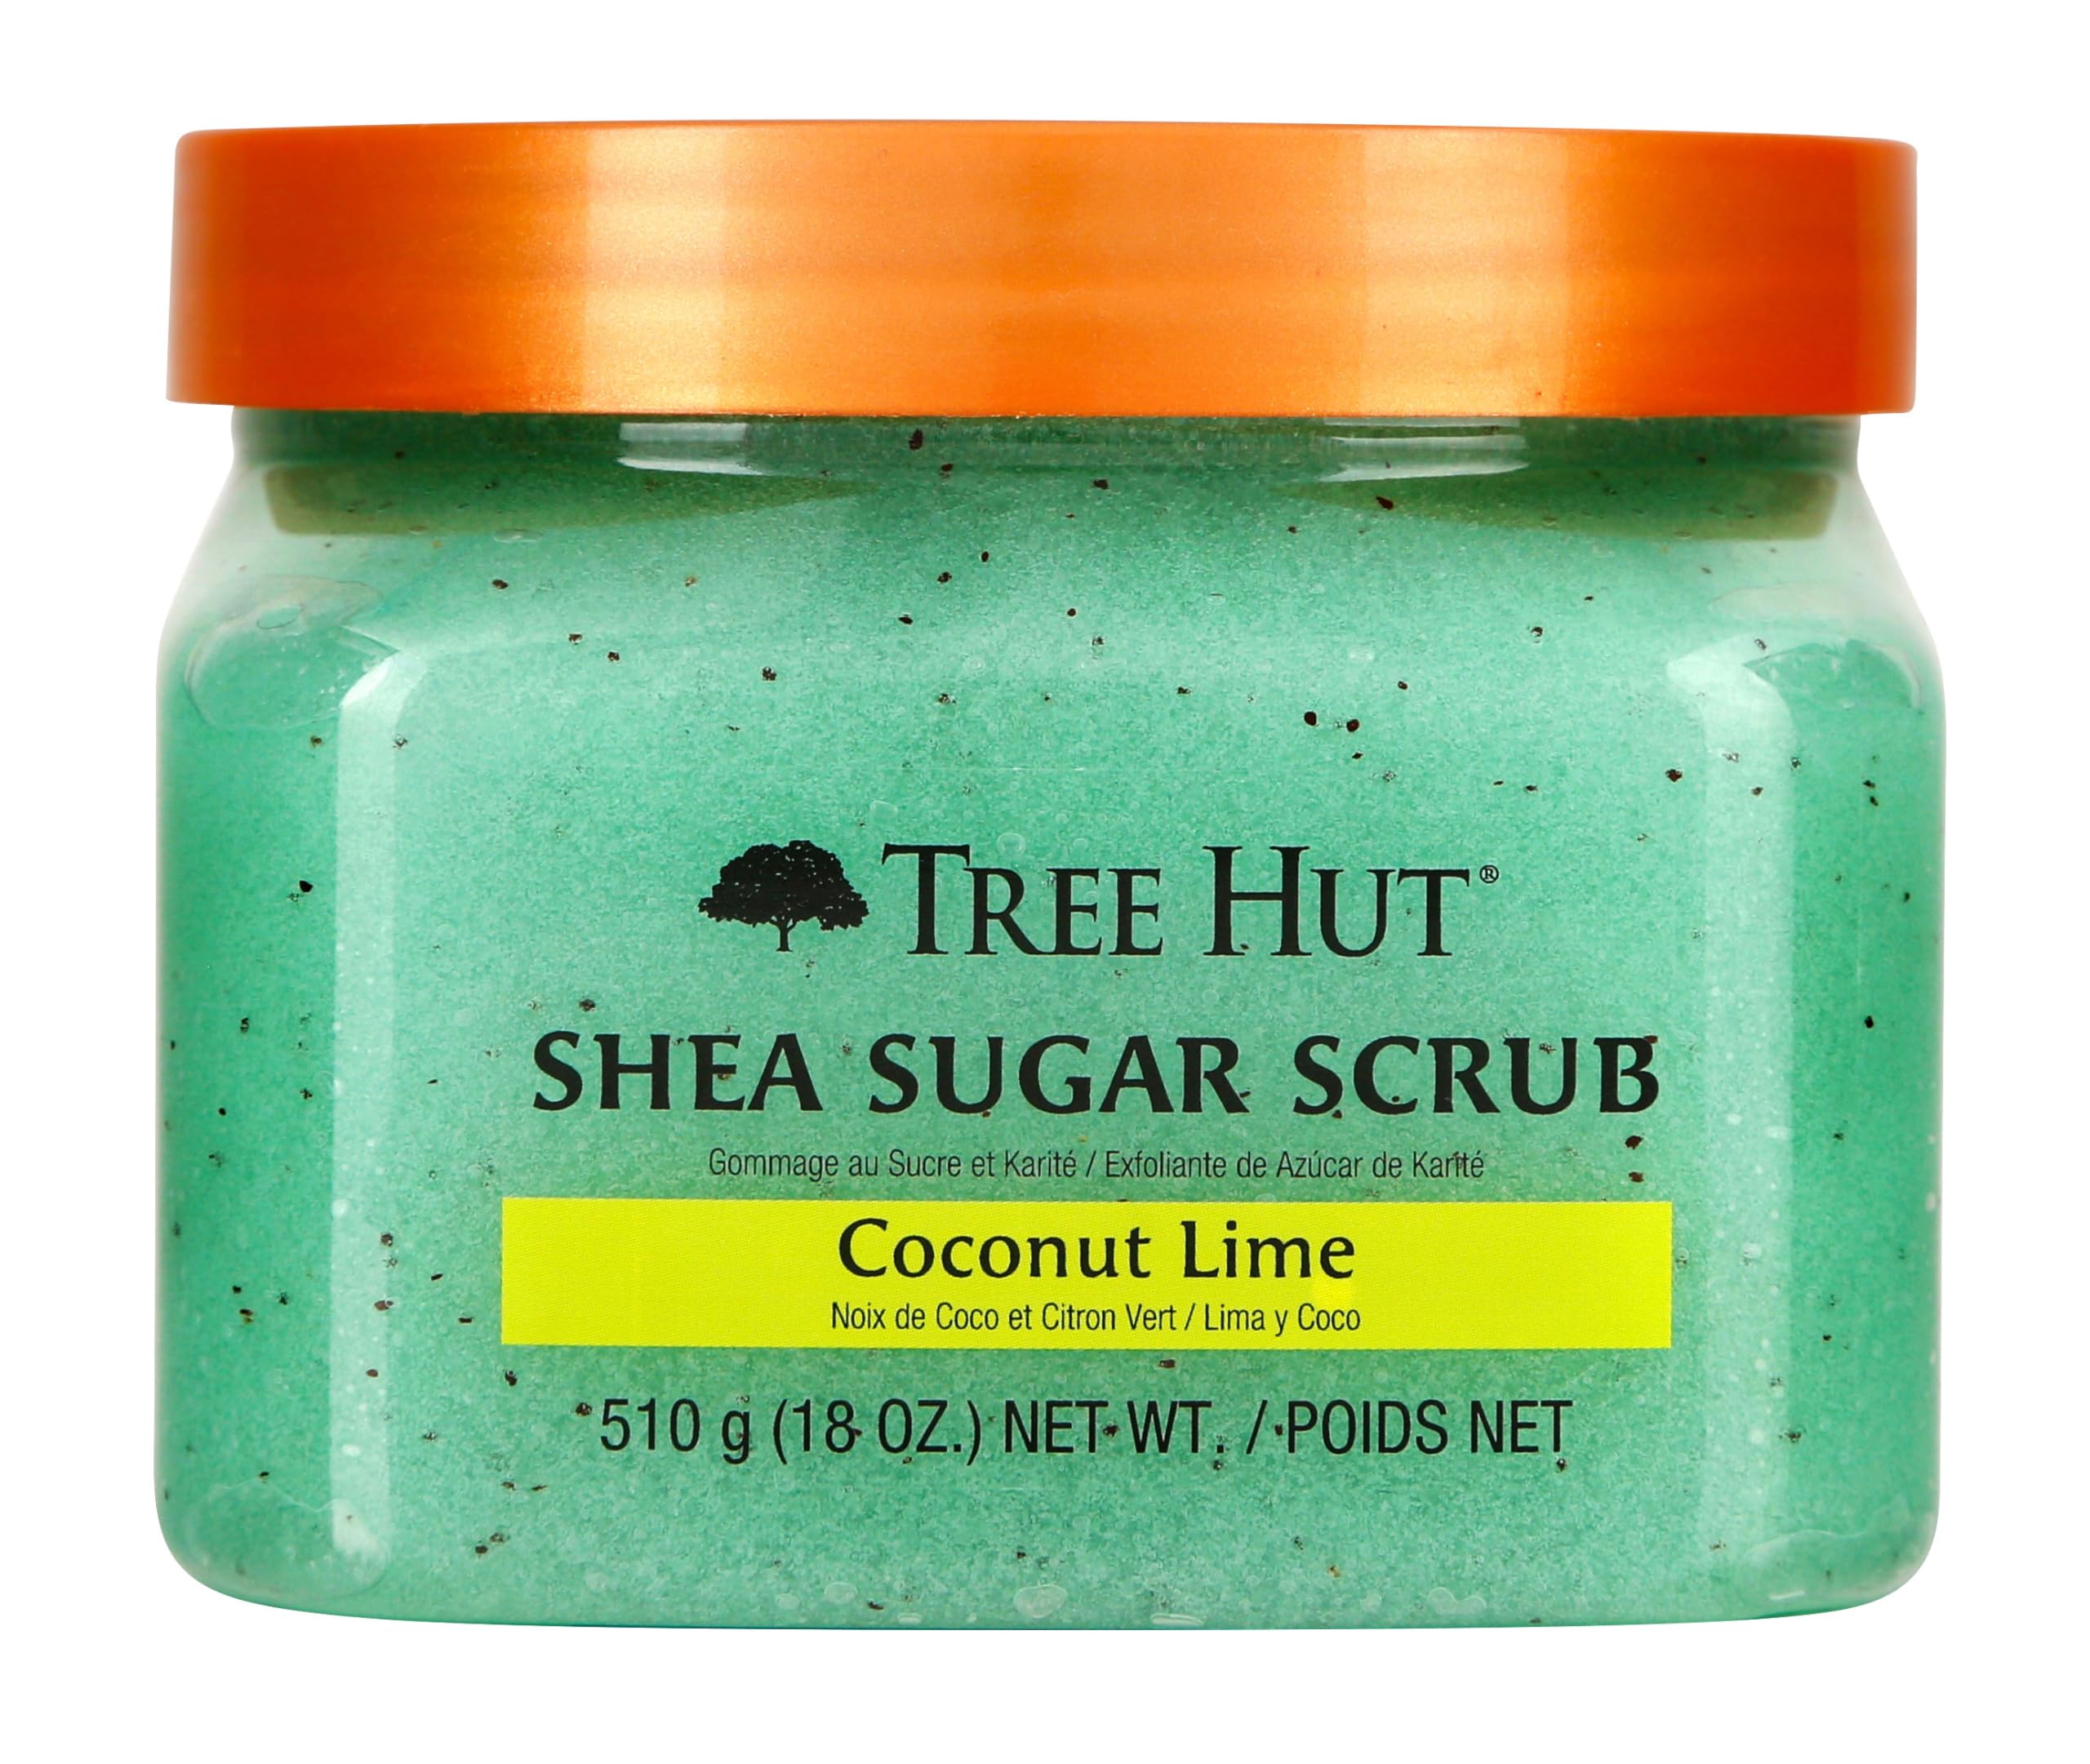 18-Oz Tree Hut Shea Sugar Body Scrub (Coconut Lime) $5.27 w/ S&S + Free Shipping w/ Prime or on $35+